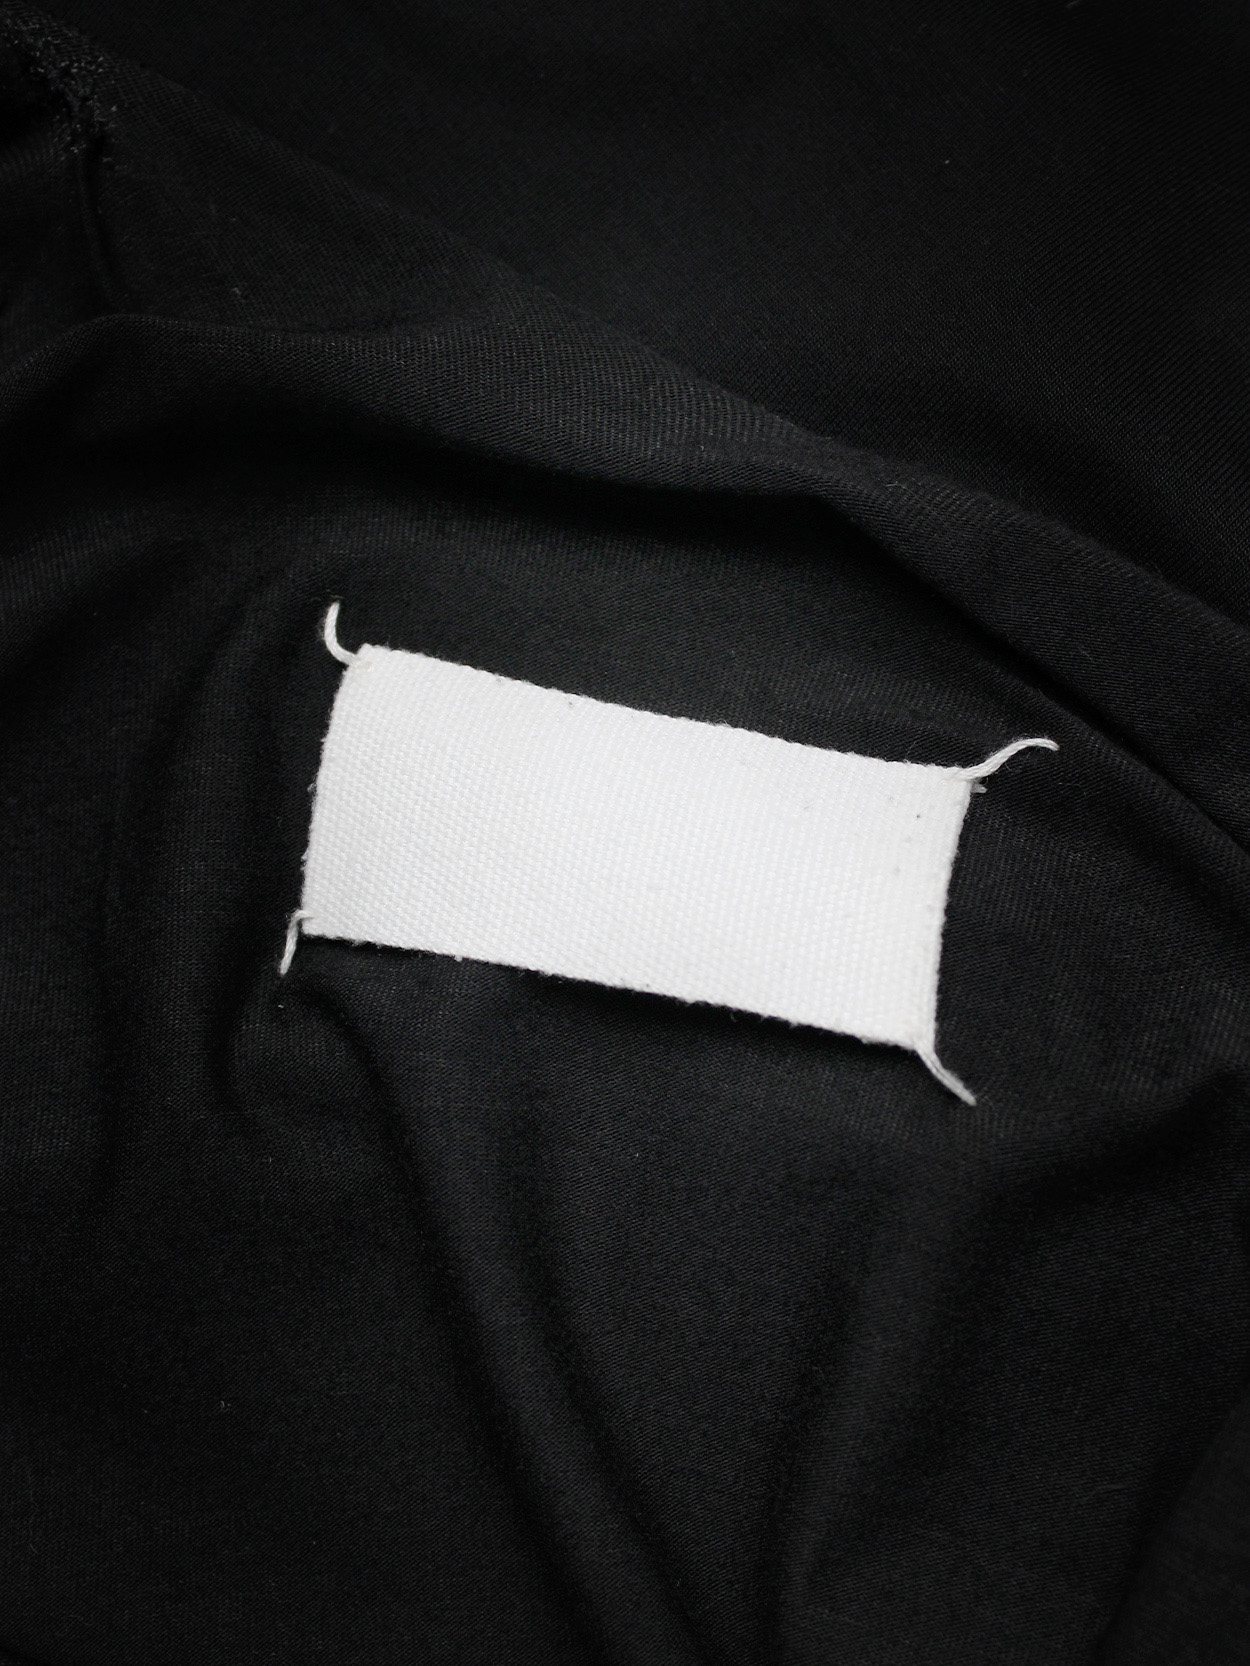 Maison Martin Margiela black floating tunic with invisible straps spring 2005 5927